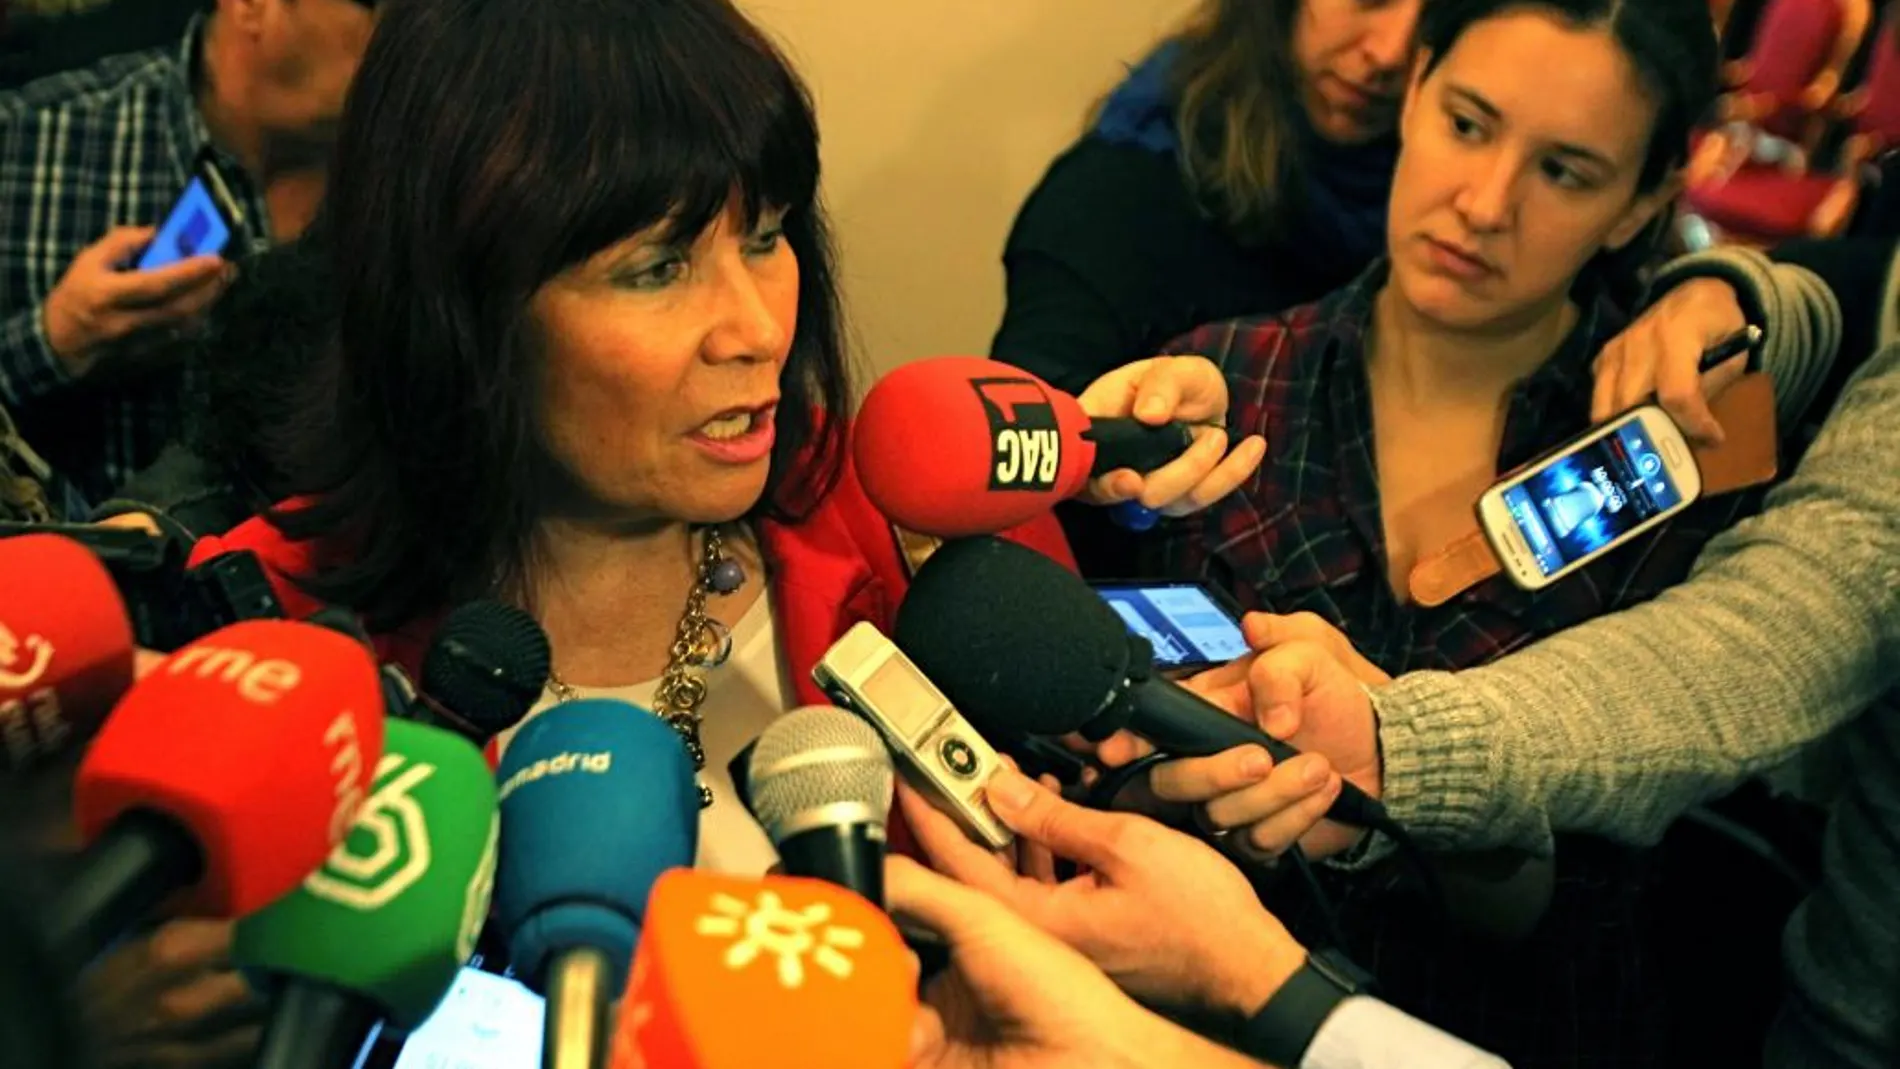 La presidenta federal del PSOE, Micaela Navarro